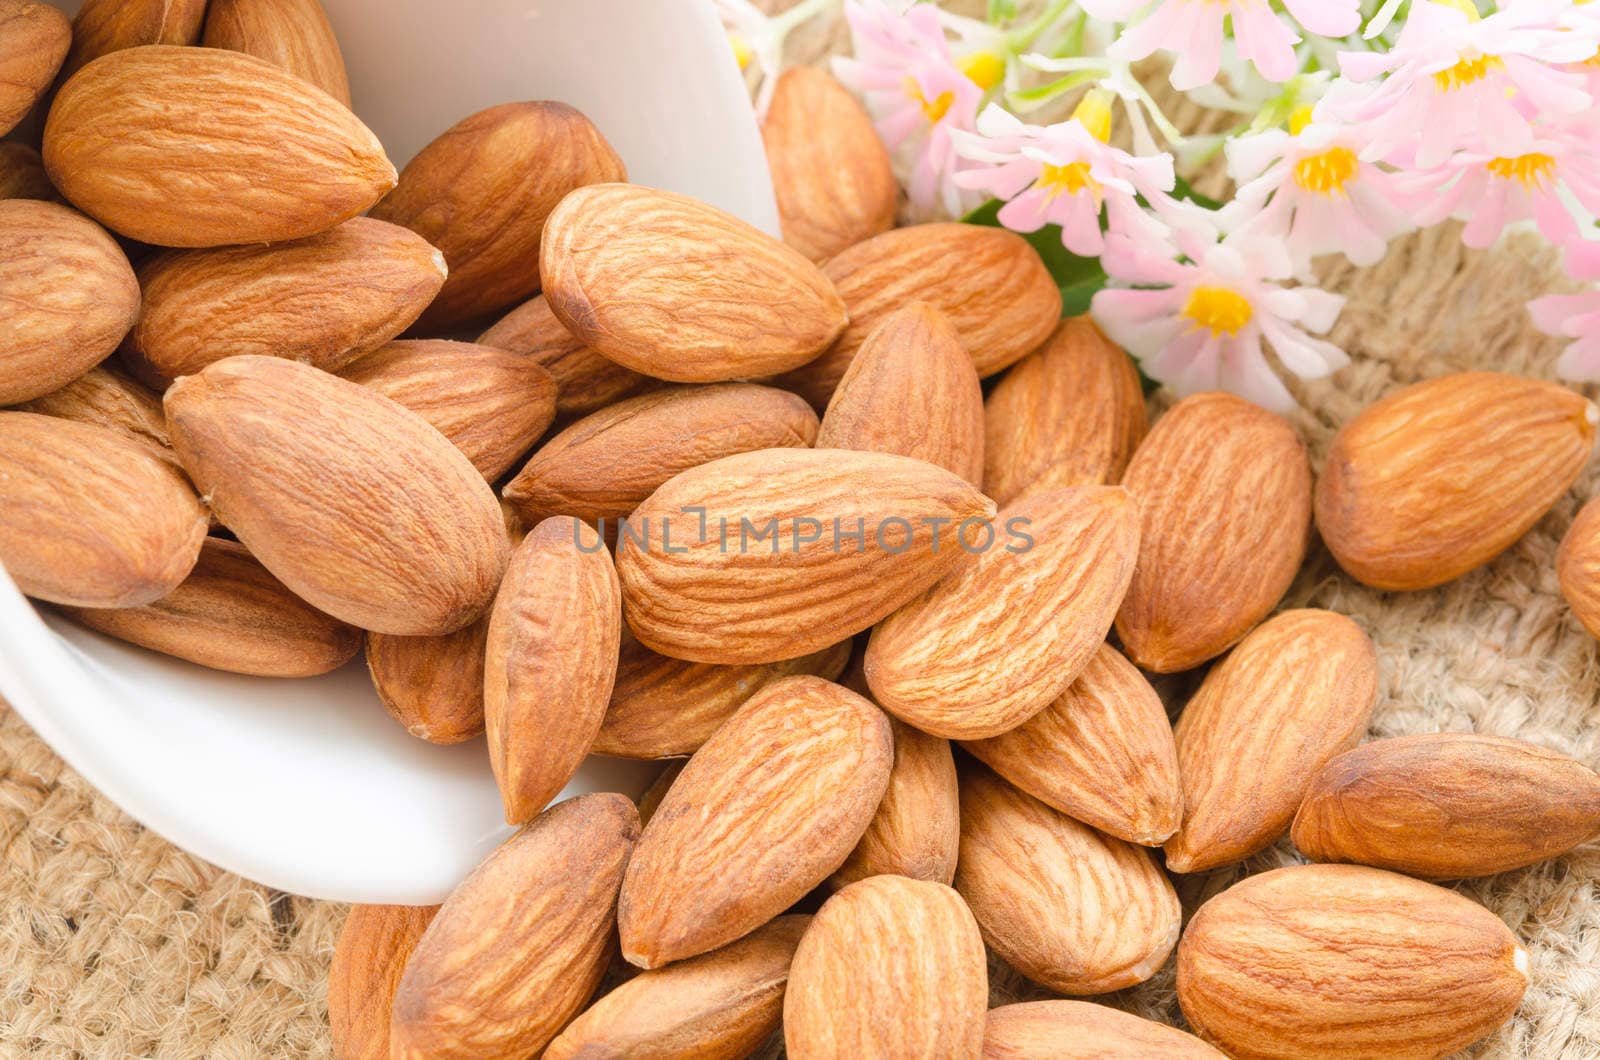 Sweet almonds with flower by Gamjai